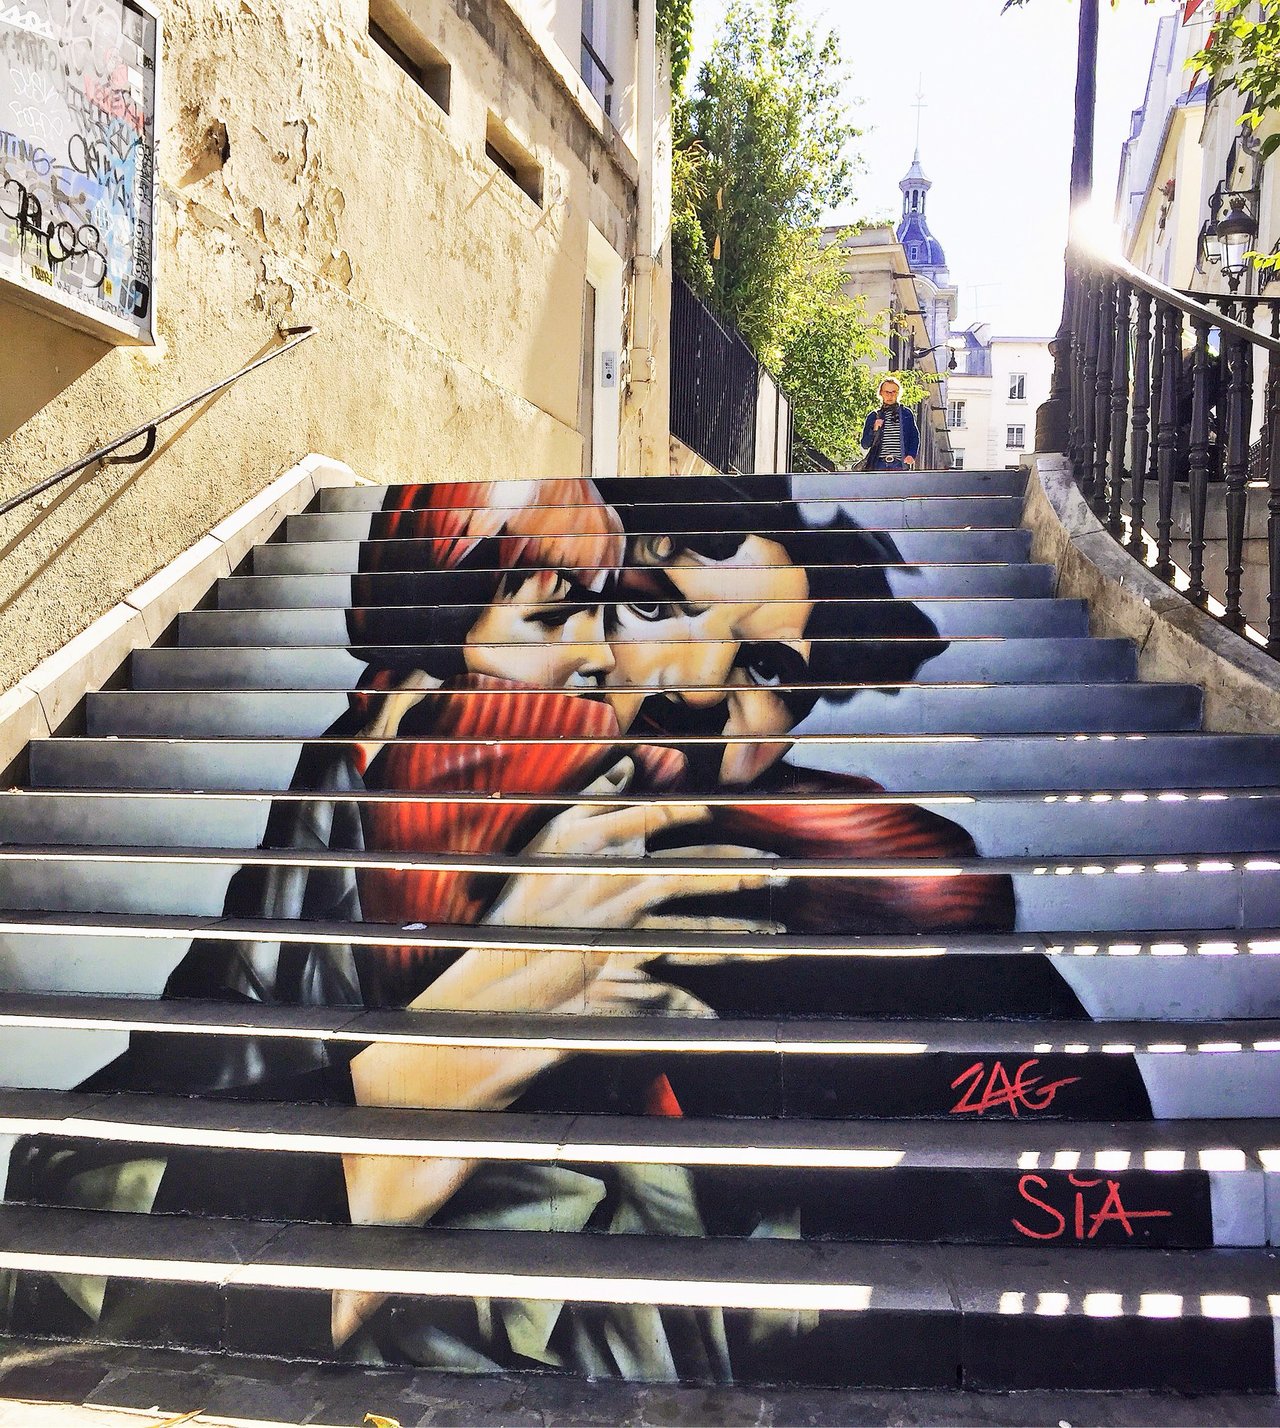 The Kid by #zagetsia #zag #sia #anamorphose #anamorphosis #3d #stairs #escalier #chaplin #charliechaplin #thekid #streetart #urbanart #graffiti #graffitiwall #wall #streetarteverywhere #streetphoto #streetartandgraffiti #urbanwalls #graffart #spray #bombing #nirindastreet https://t.co/xYUcFIVFbc